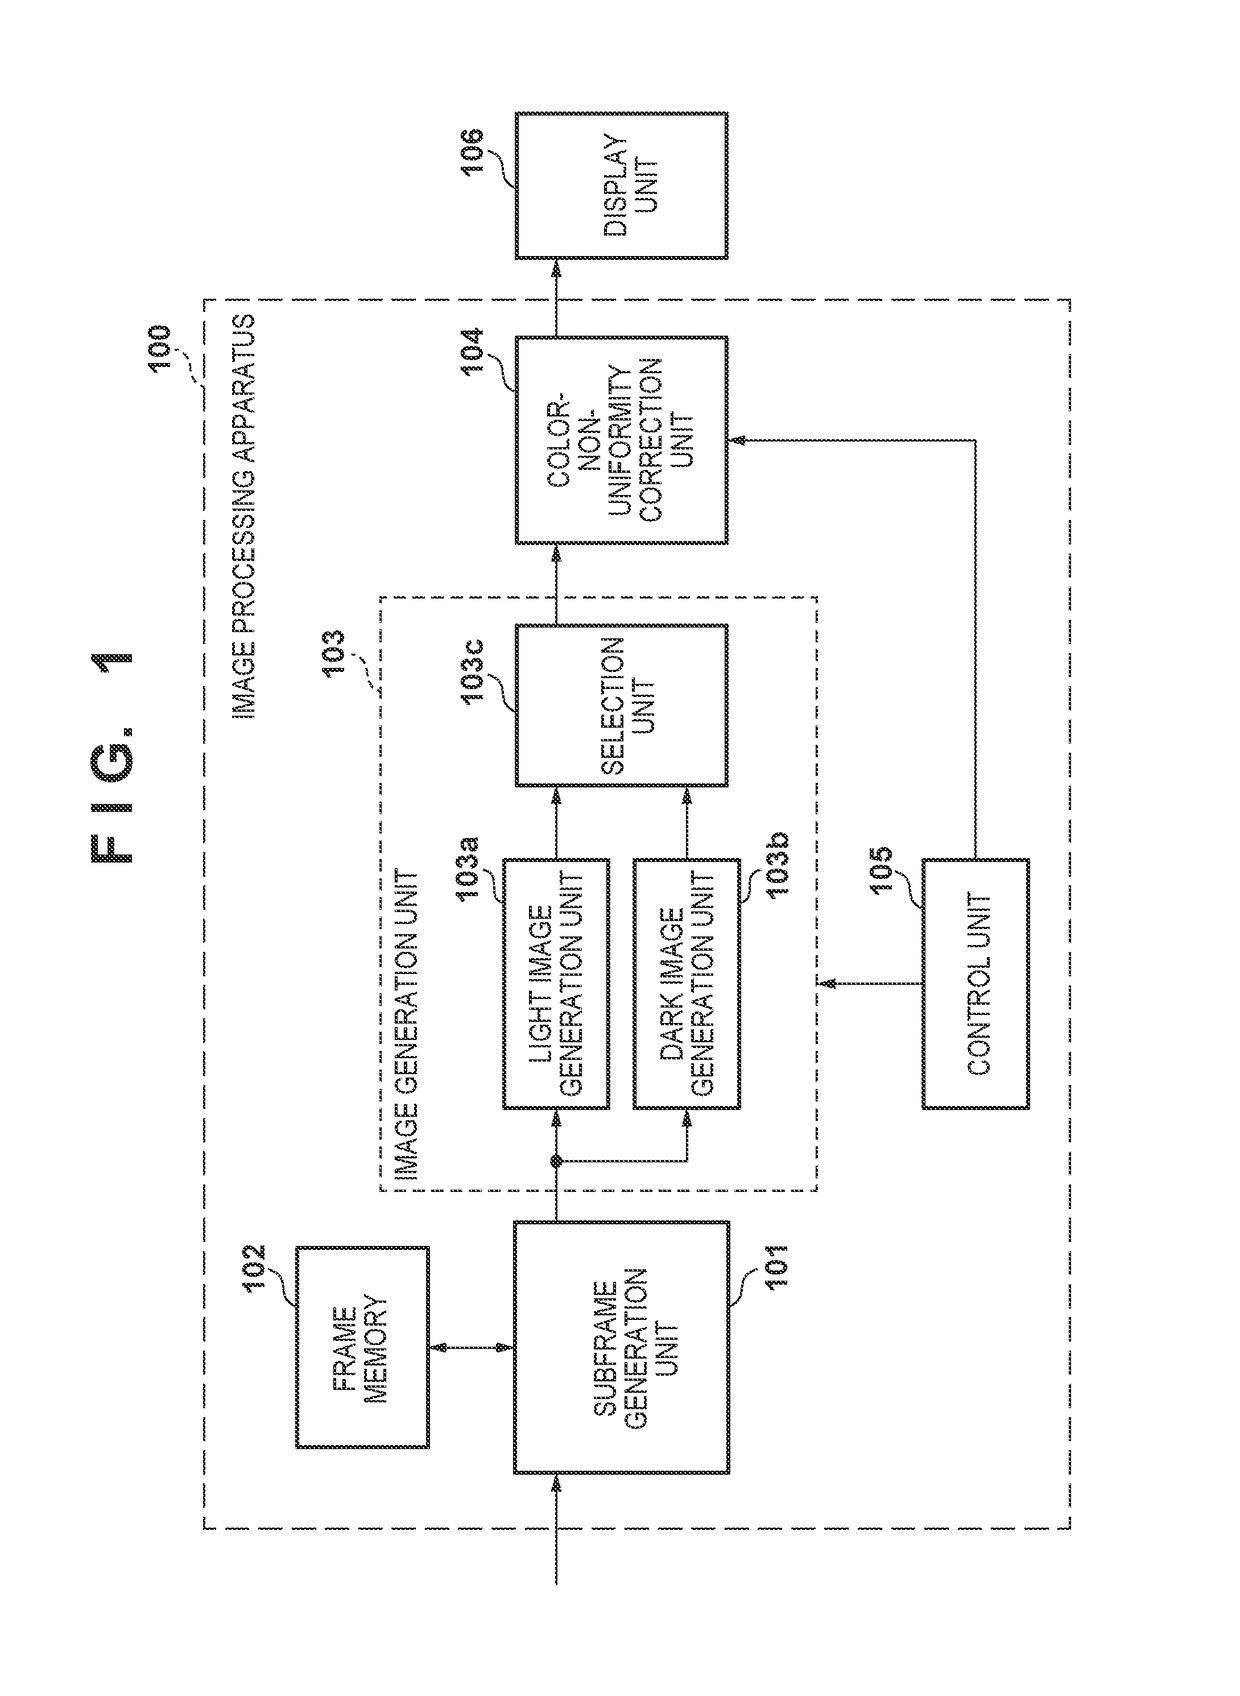 Image processing apparatus, method thereof, and image display apparatus